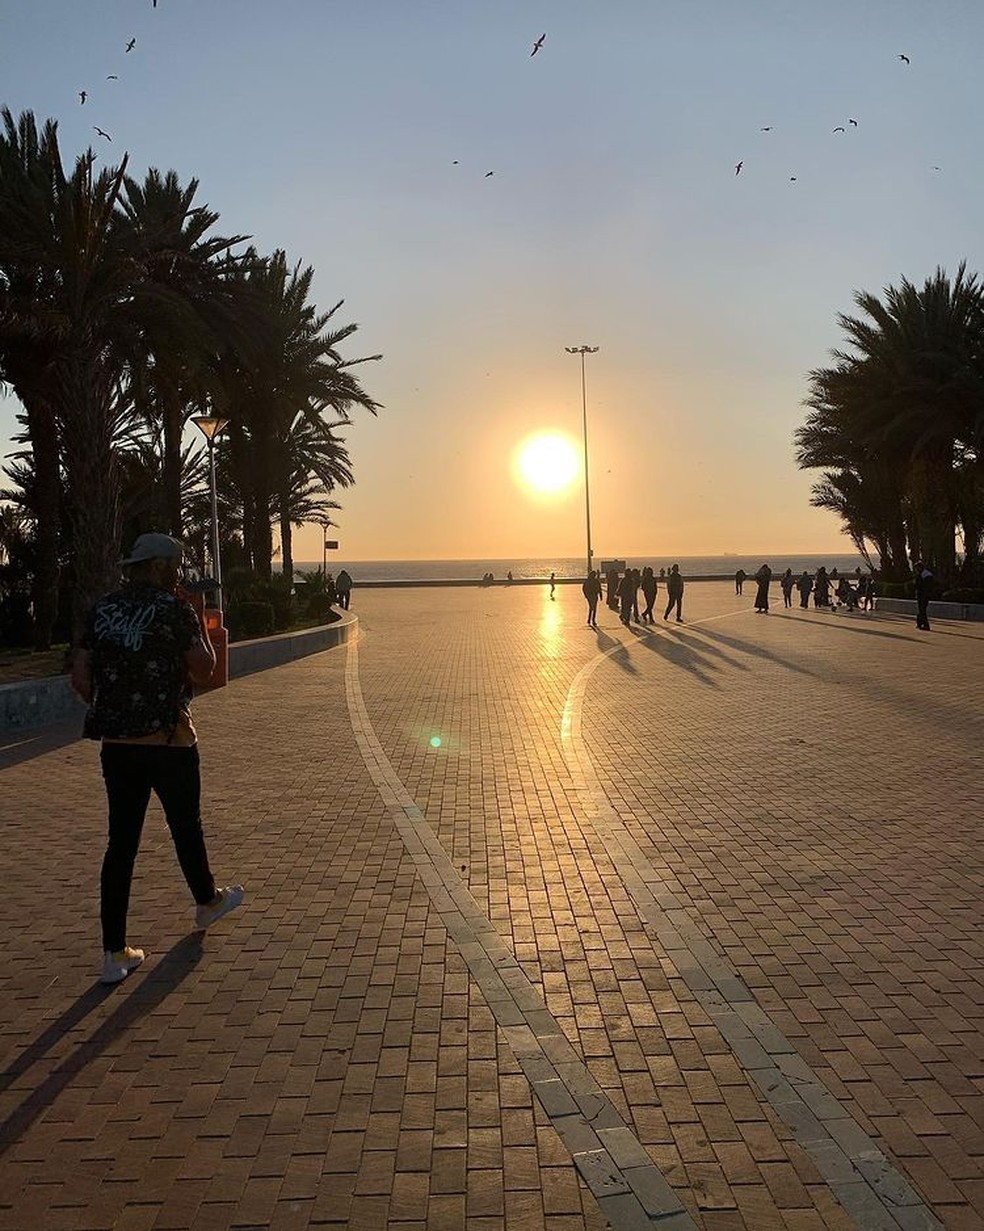 Agadir, Marrocos — Foto: Reprodução/ Instagram via @abde.llalli